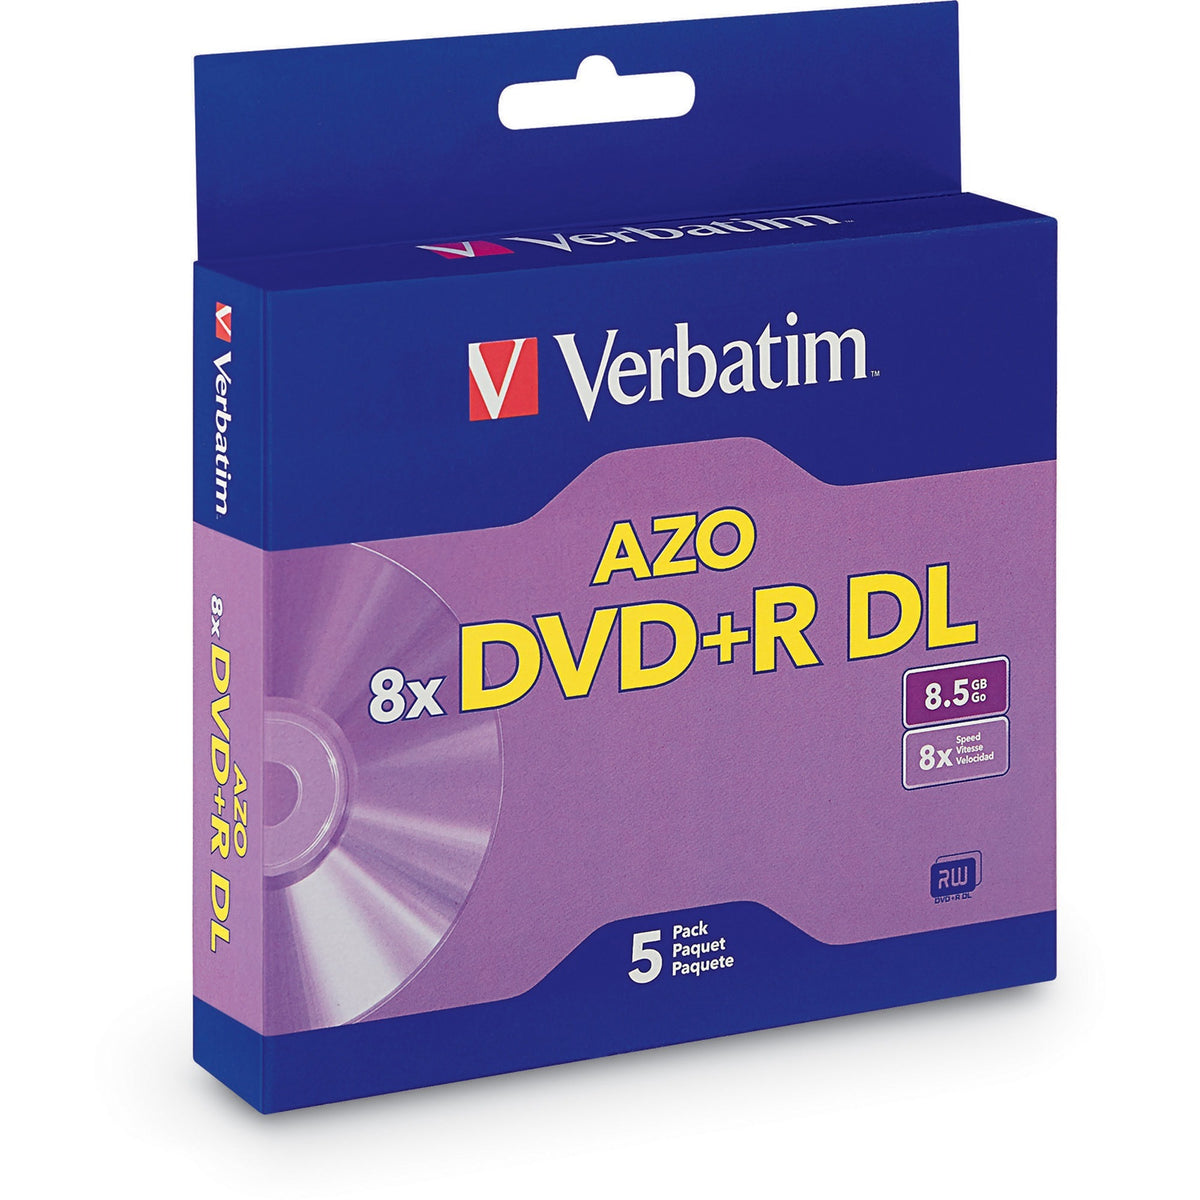 Verbatim DVD+R DL 8.5GB 8X with Branded Surface - 5pk Jewel Case Box - 95311